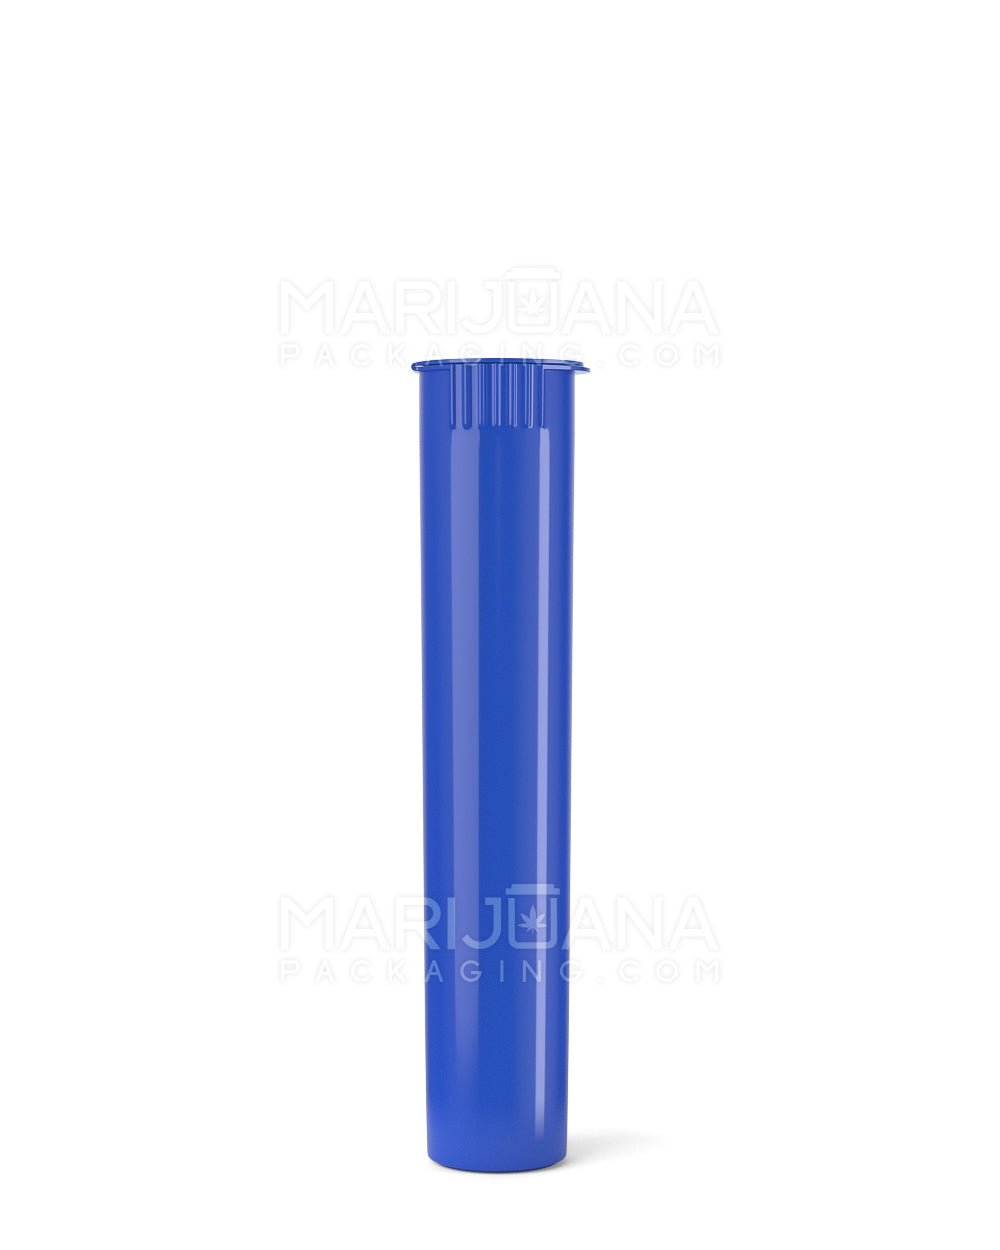 Child Resistant | Pop Top Opaque Plastic Pre-Roll Tubes | 95mm - Blue - 1000 Count - 2